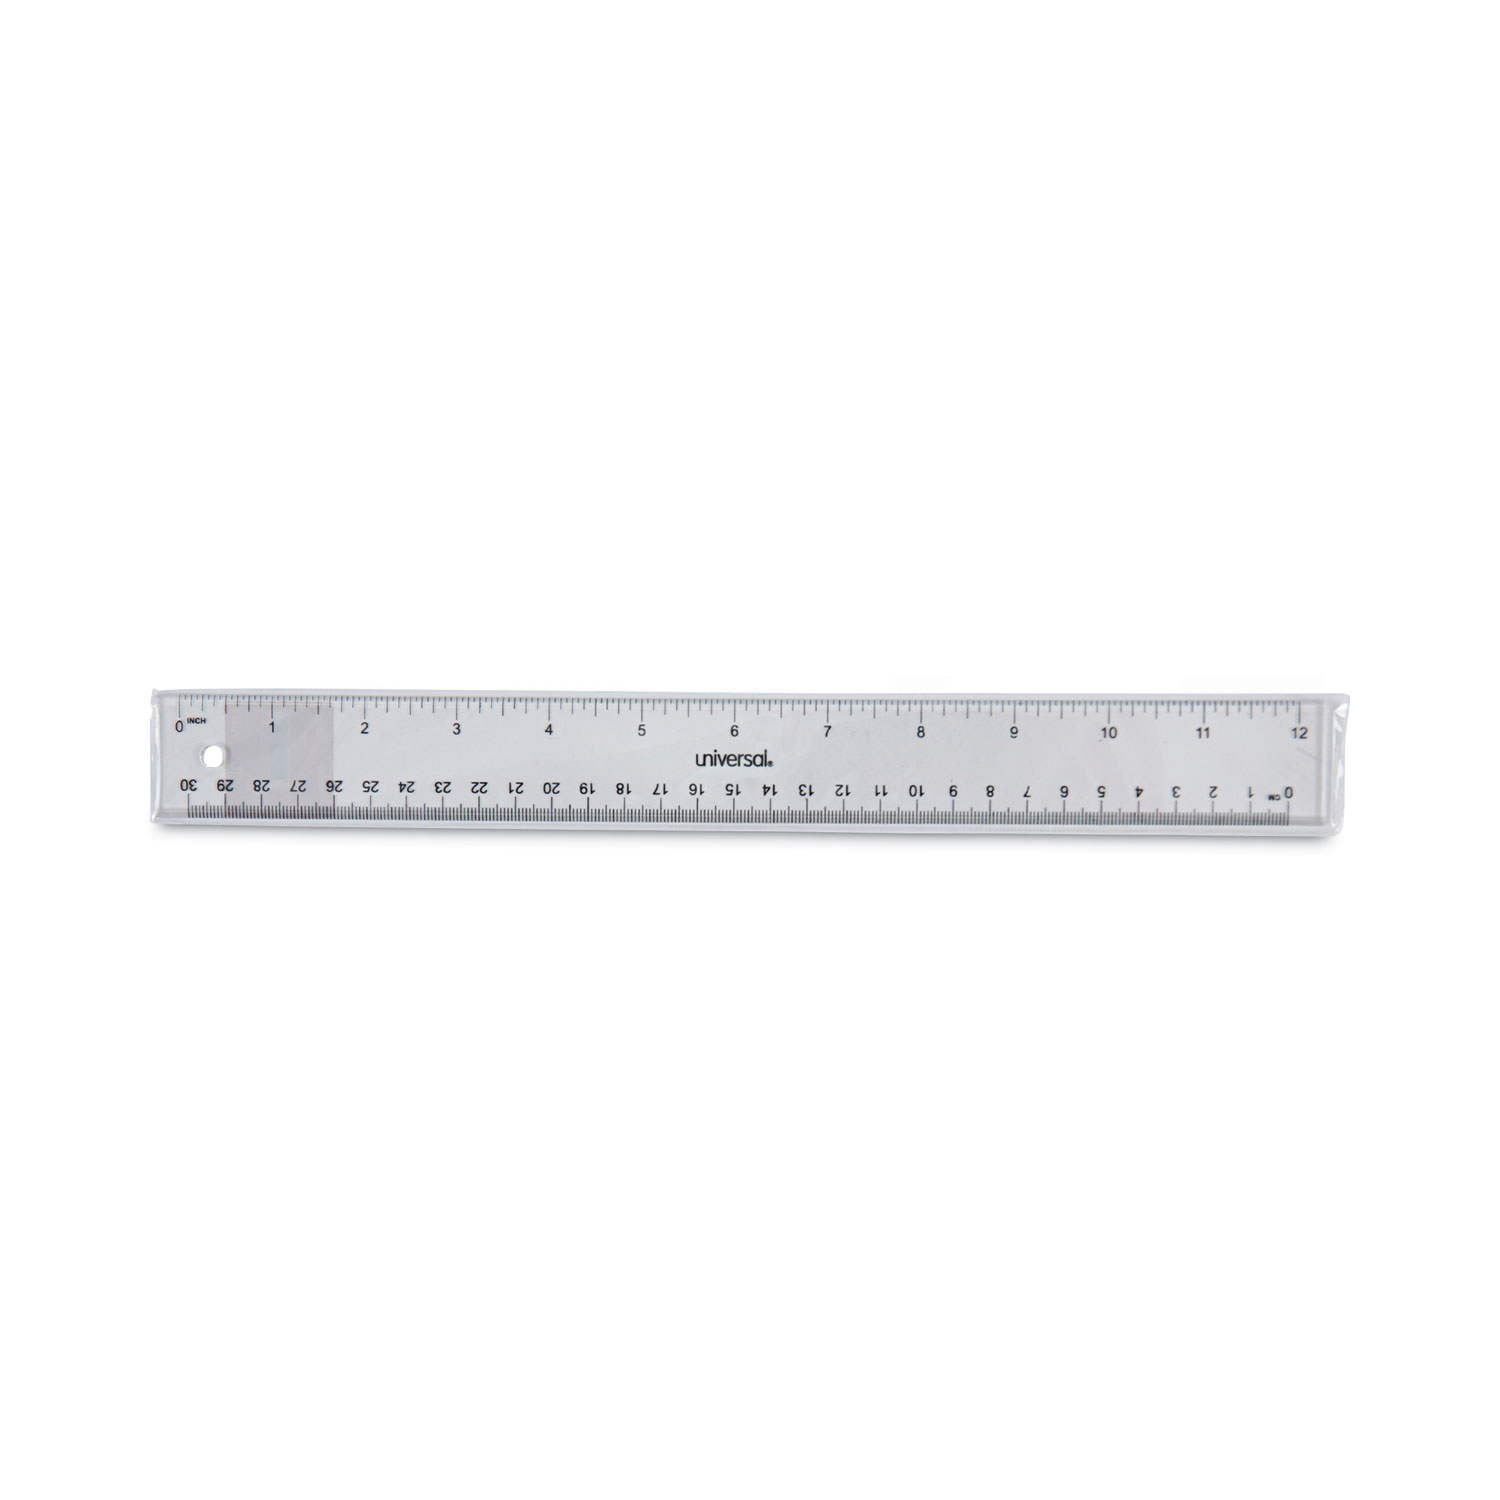 Clear Flexible Acrylic Ruler, Standard/Metric, 12 Long, Clear